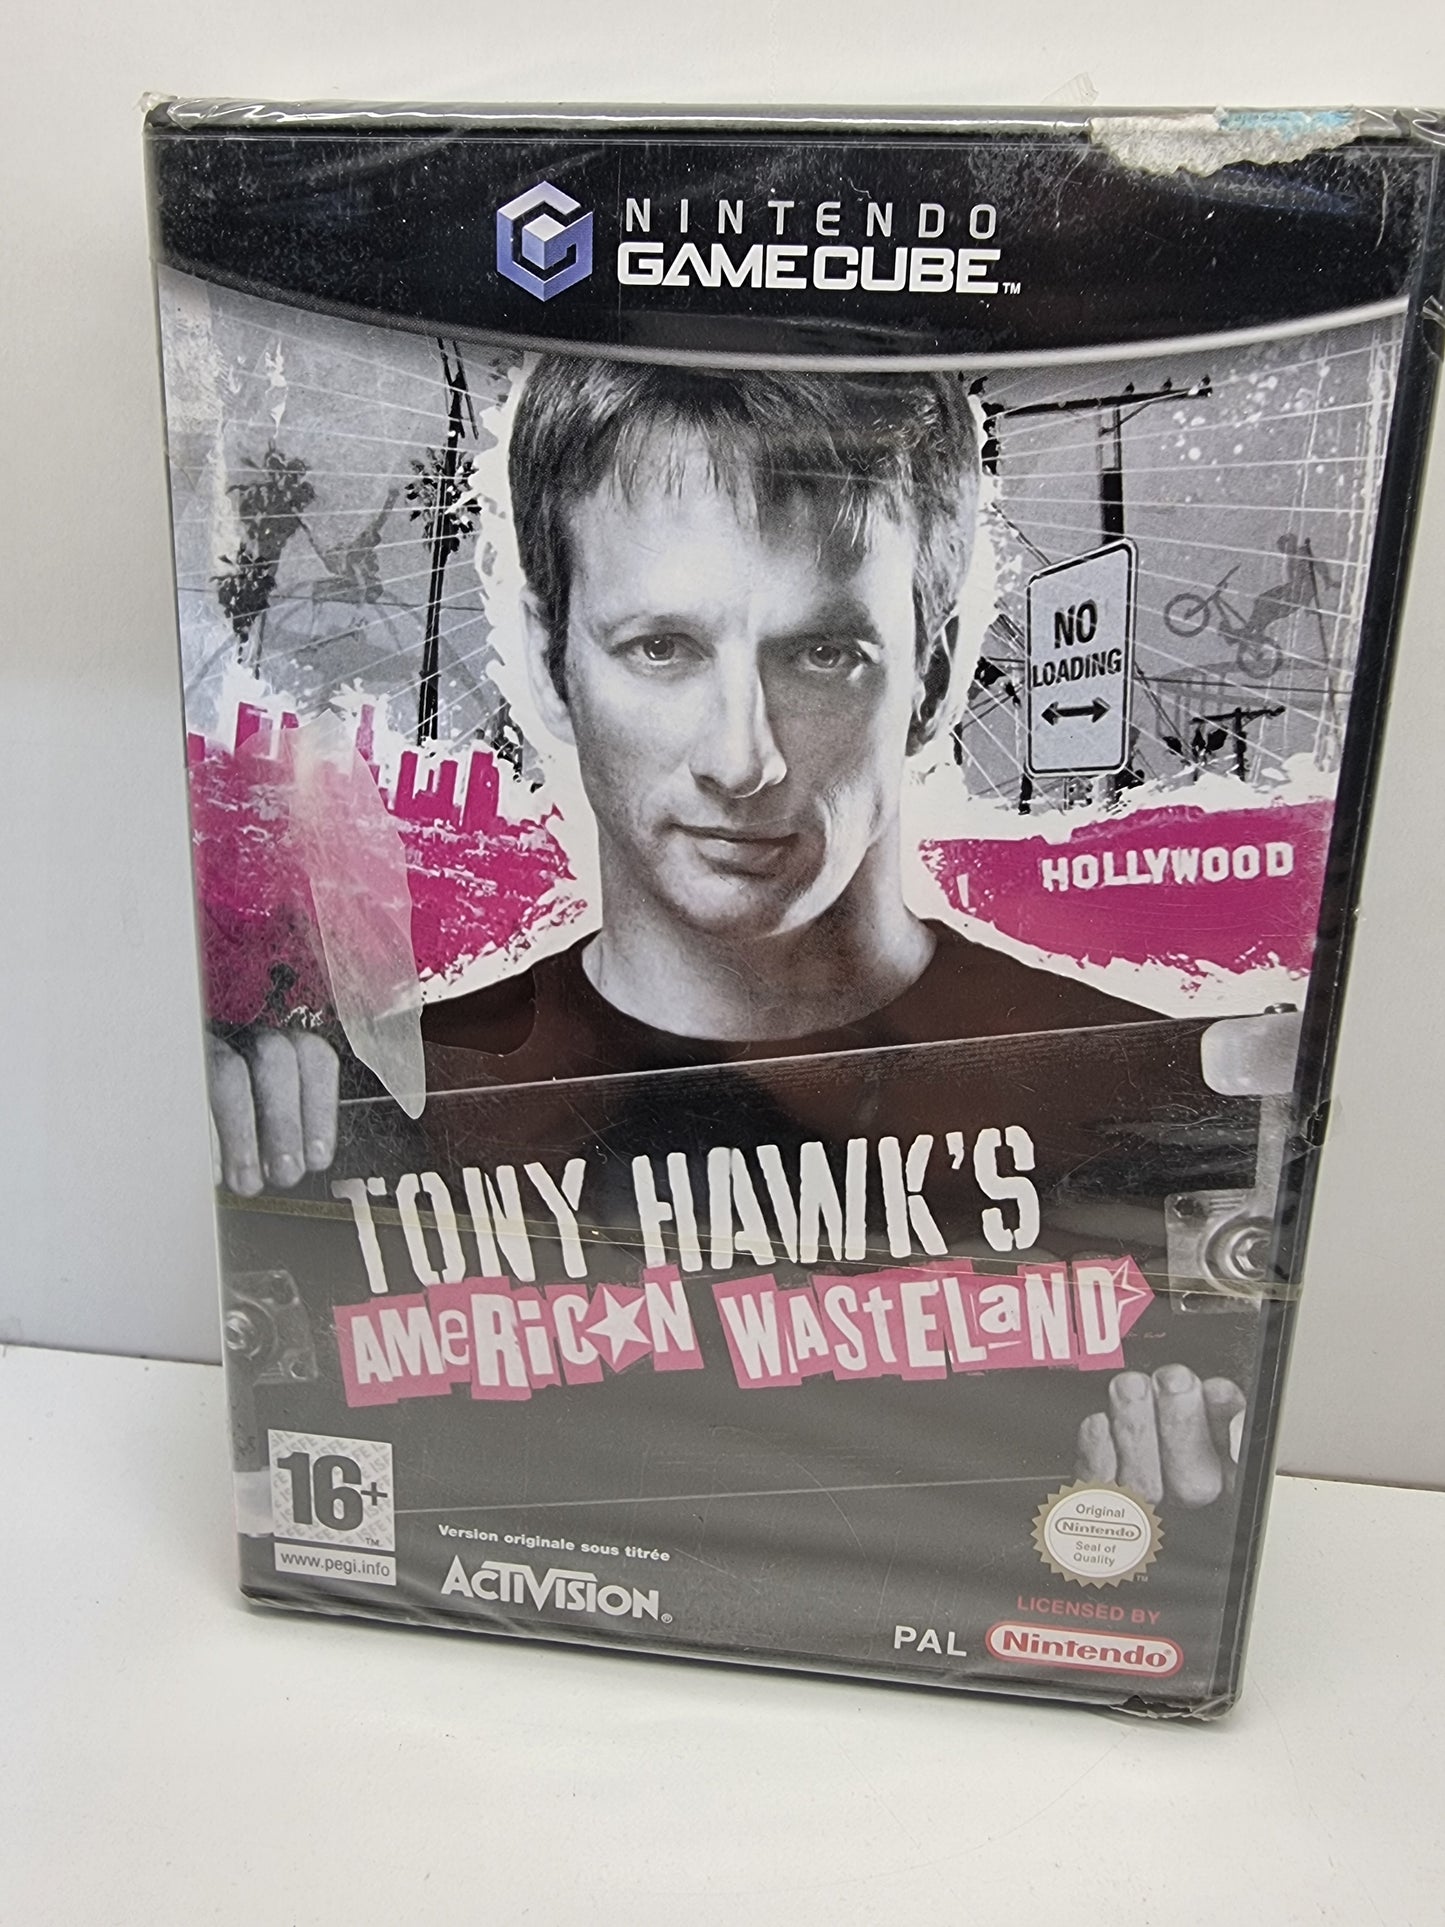 Gamecube Tony Hawks American Wasteland - NOVO